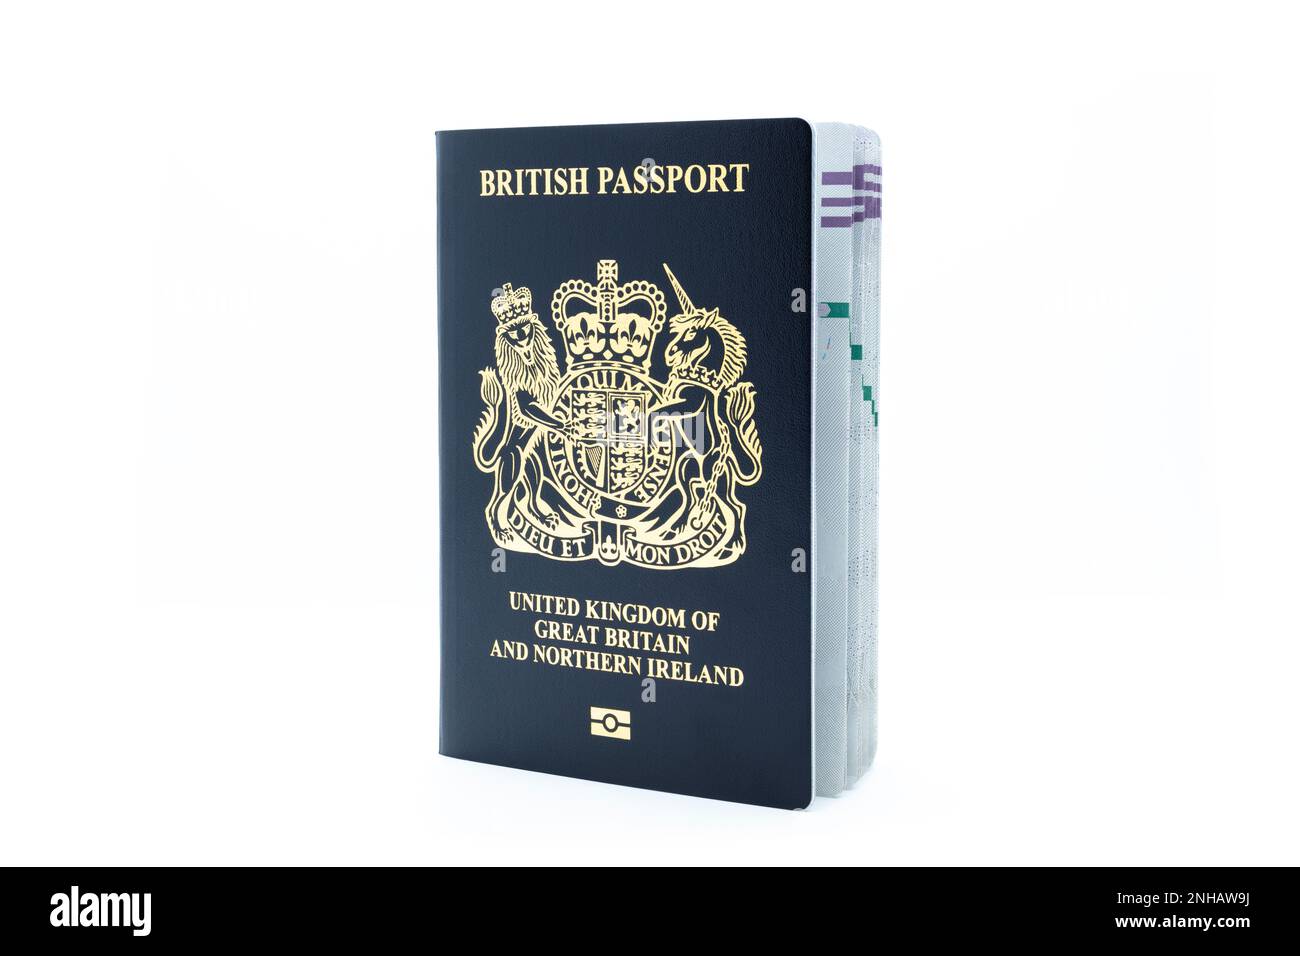 Pasaporte británico UK Passport UK British Passport azul nuevo pasaporte británico nuevo pasaporte británico uk pasaporte azul recortado pasaporte blanco Foto de stock